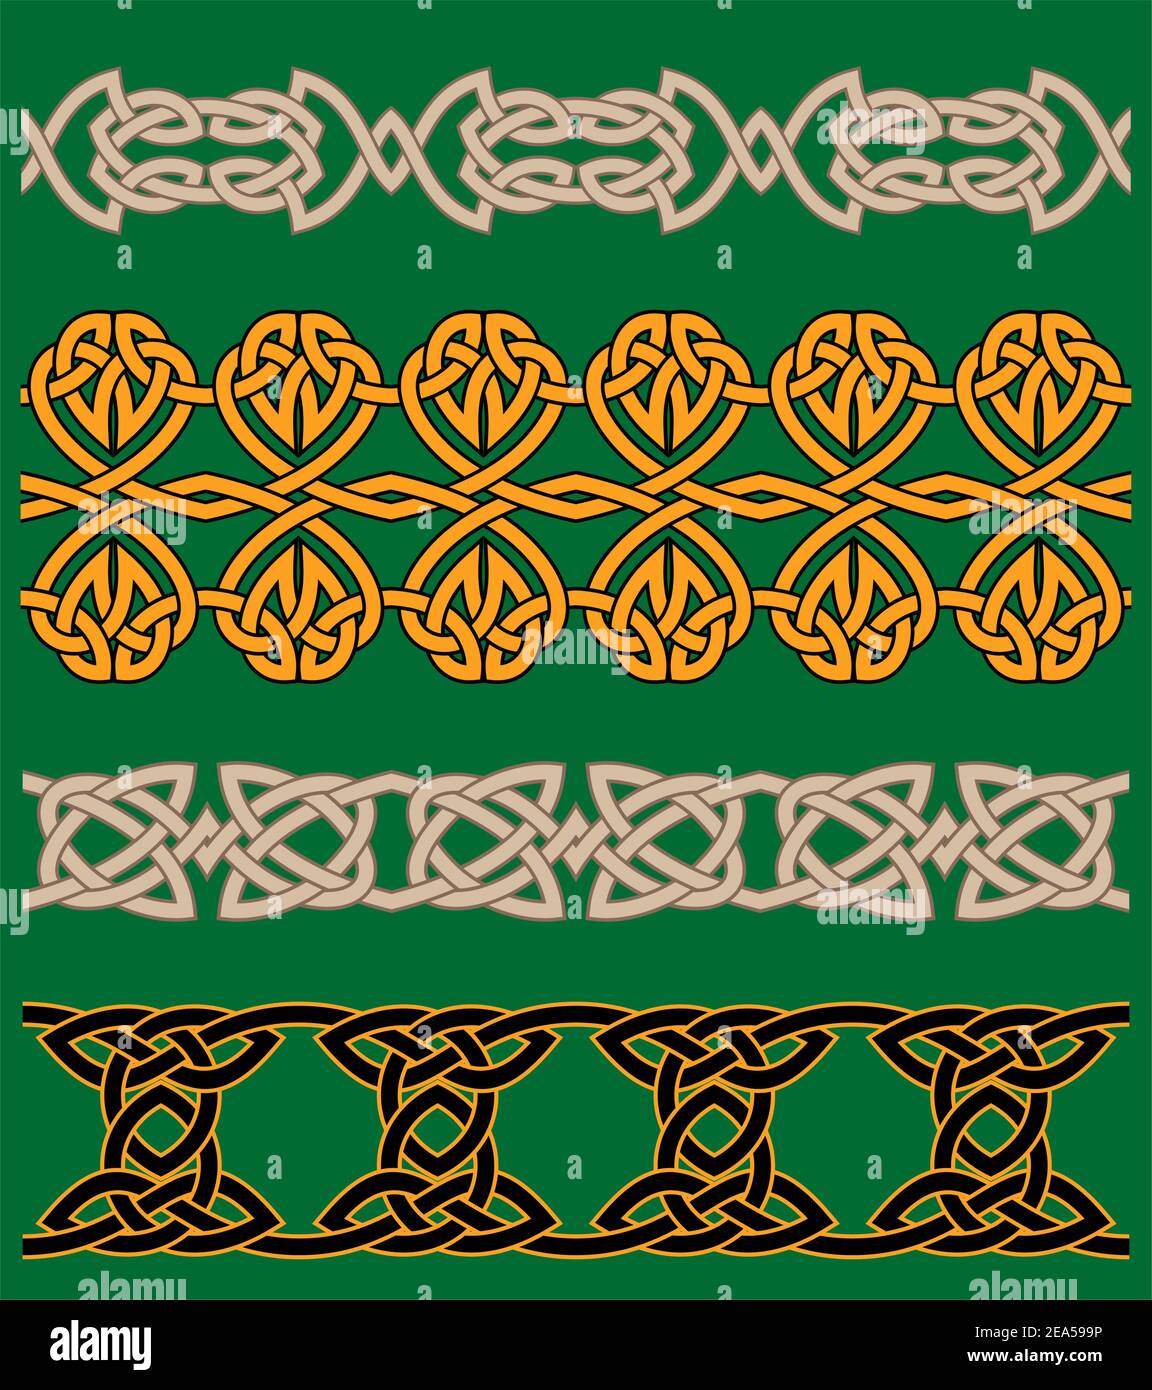 Celtic knot decorative border Imágenes vectoriales de stock - Página 3 -  Alamy